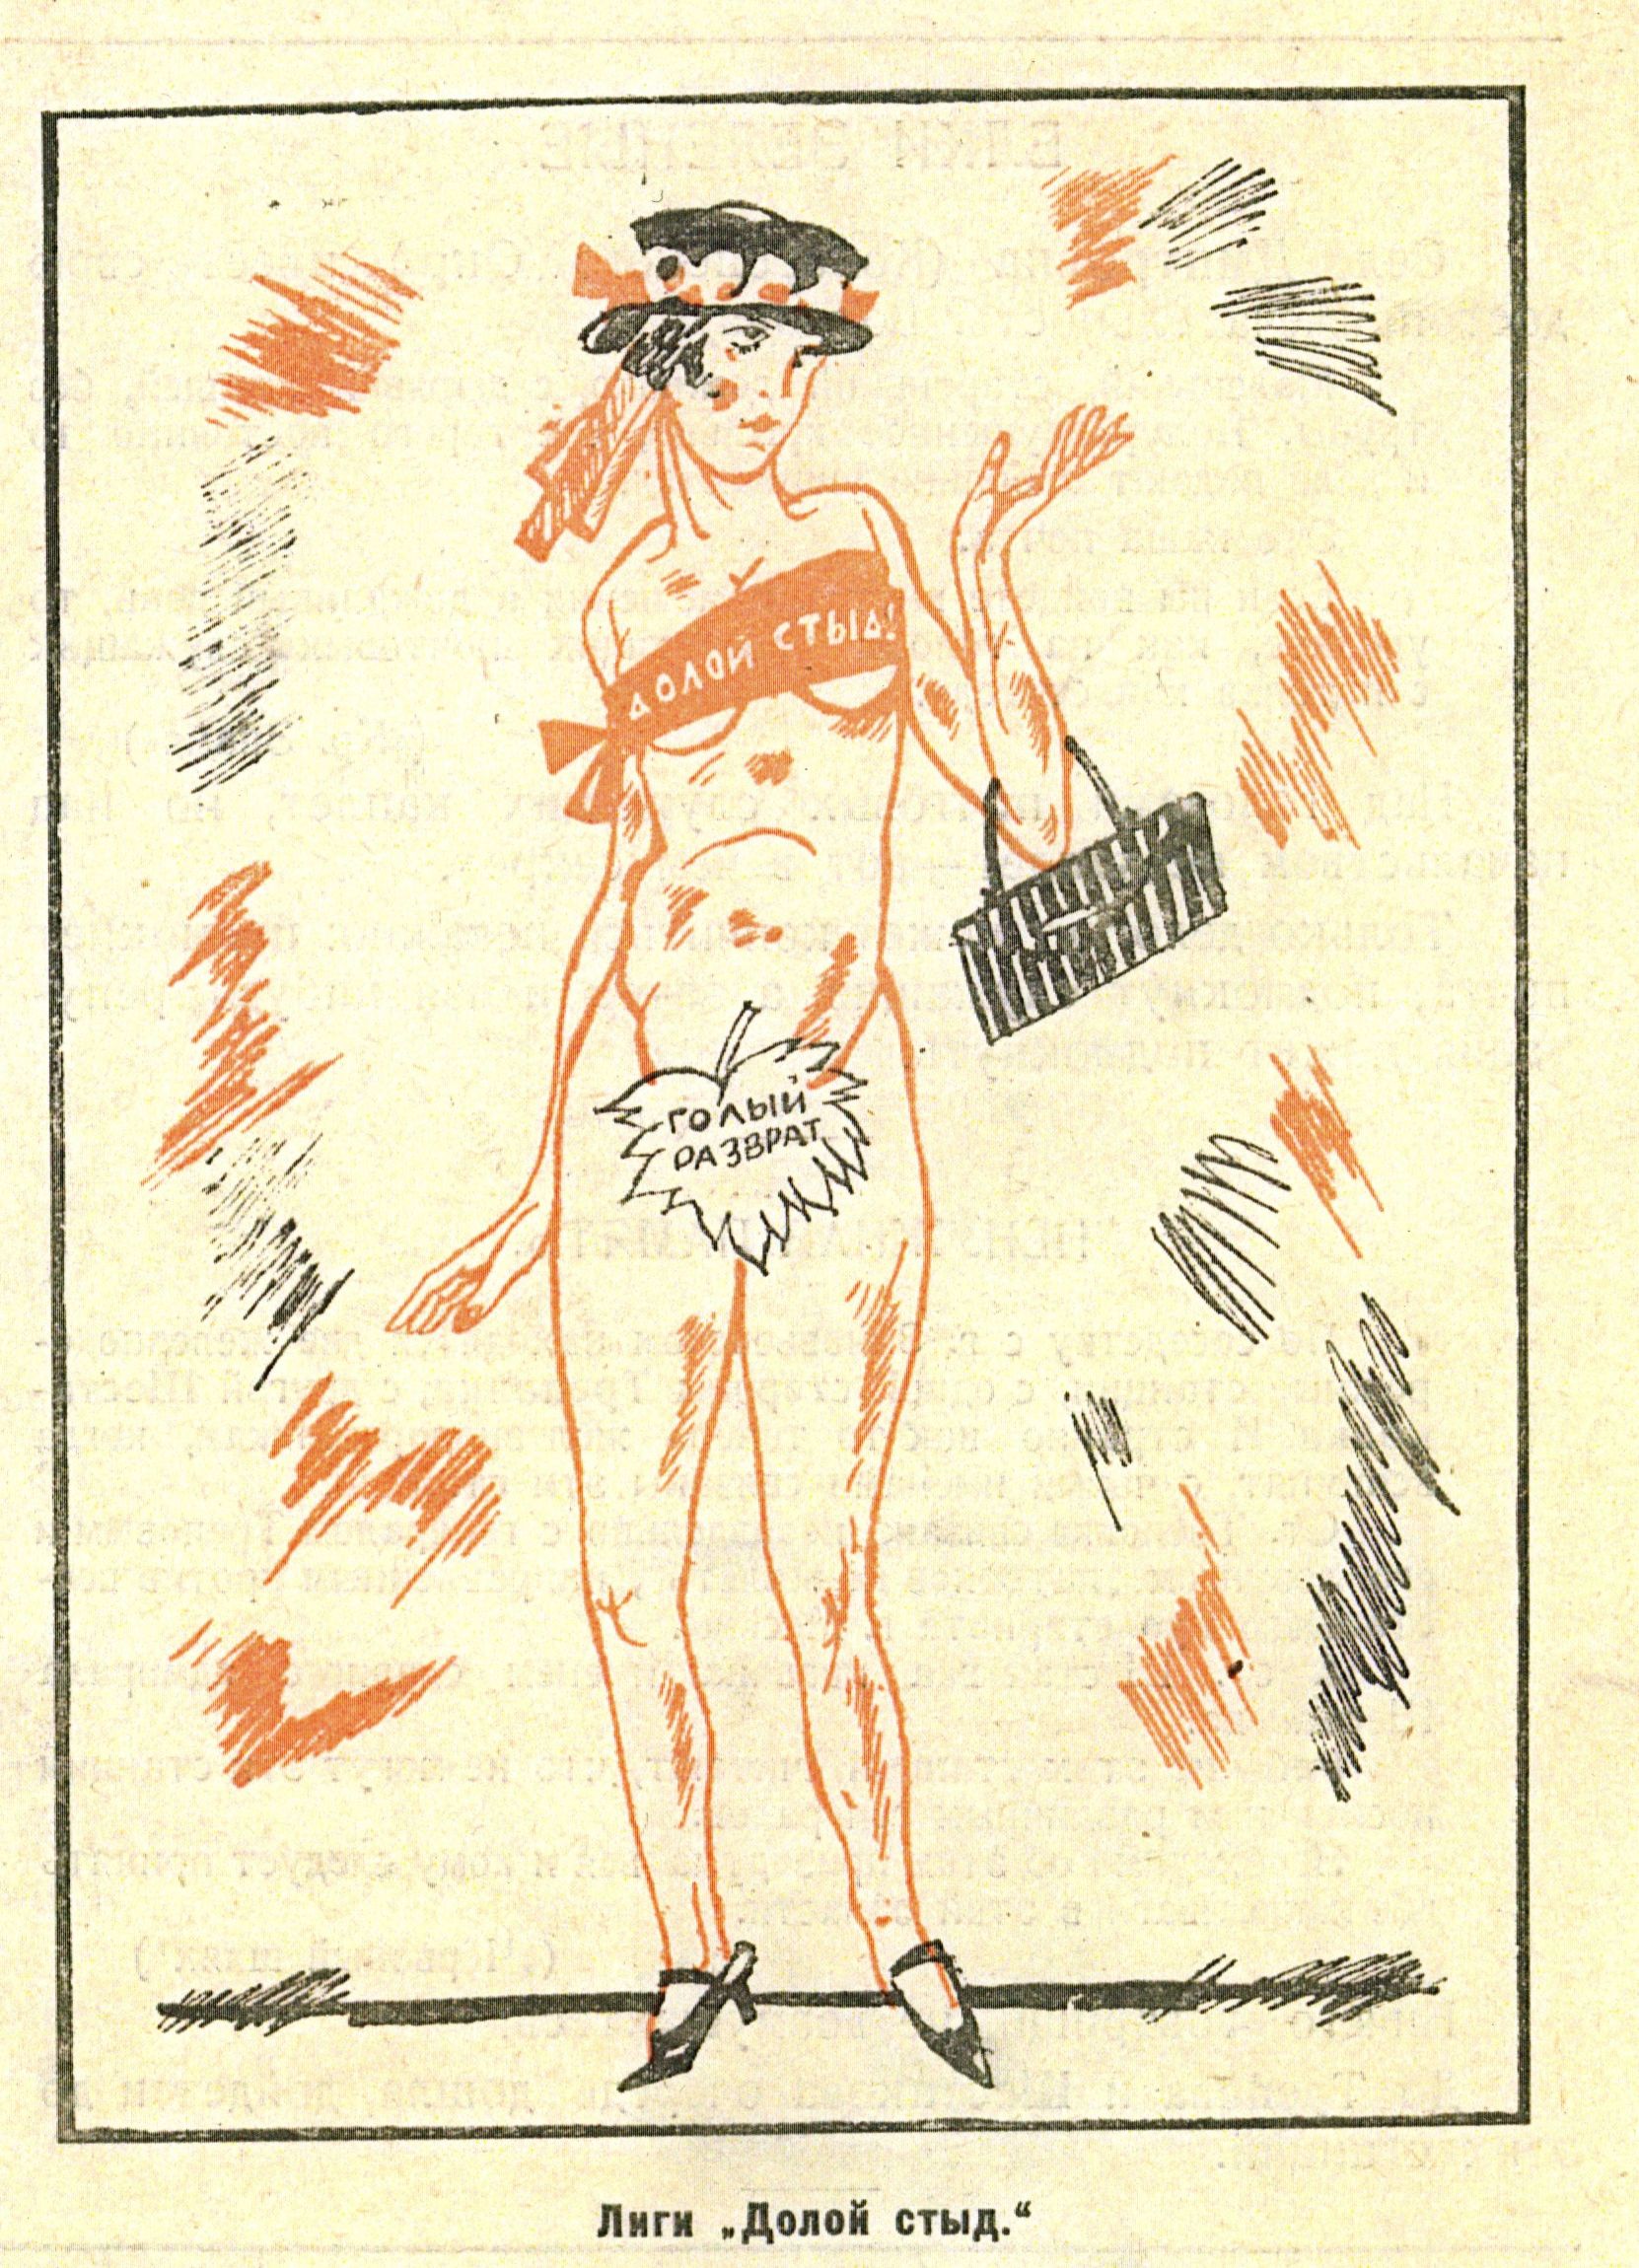 Карикатура Ка-Фр'а «Голая пропаганда» (фрагмент) на общество «Долой стыд!». 1924 год